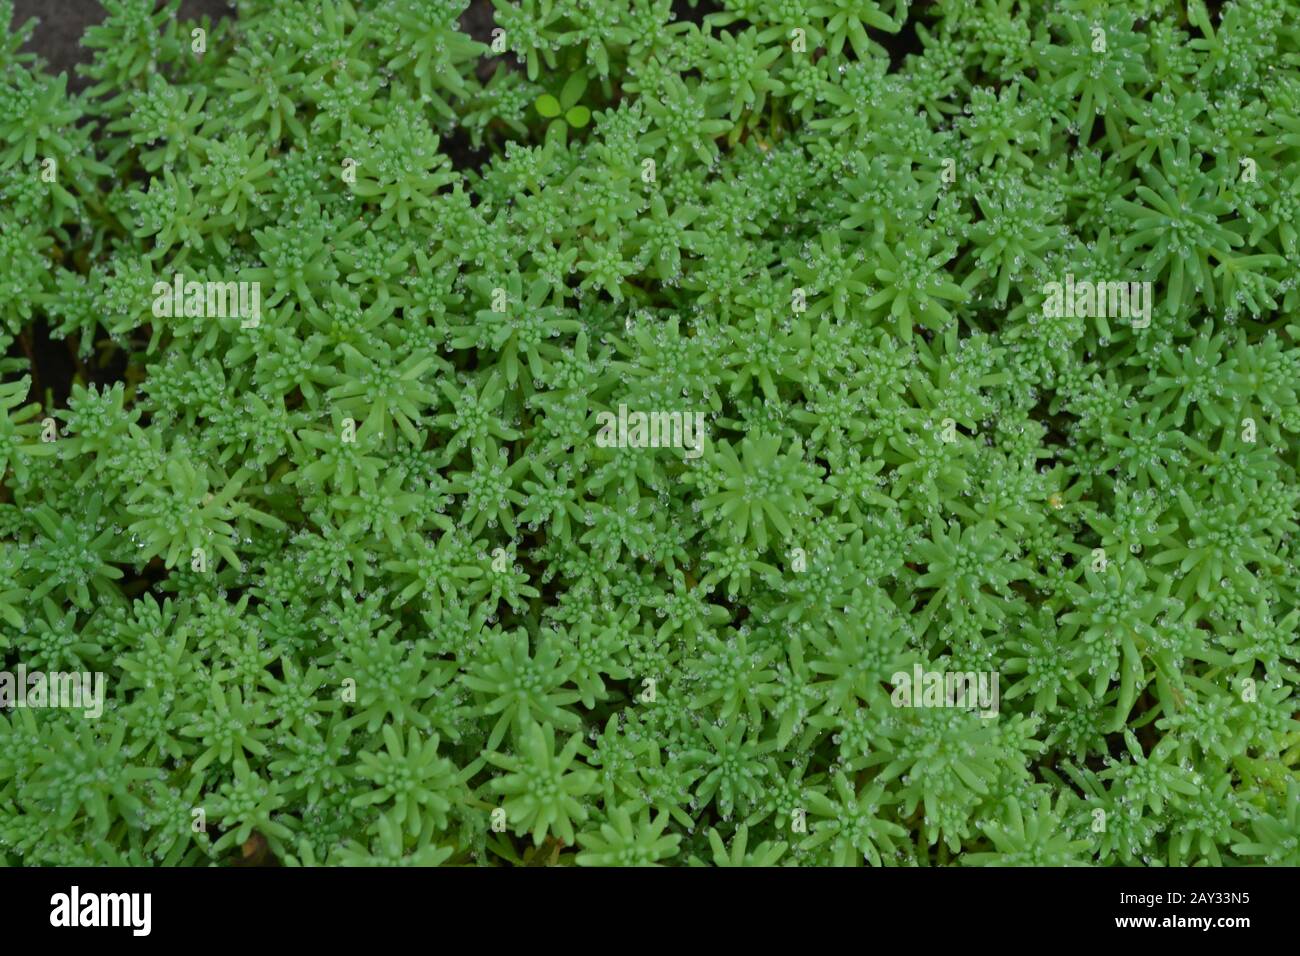 Stonecrop. Hare cabbage. Sedum. Green moss. Decorative grassy carpet. Ornamental garden plants. Close-up. Horizontal Stock Photo